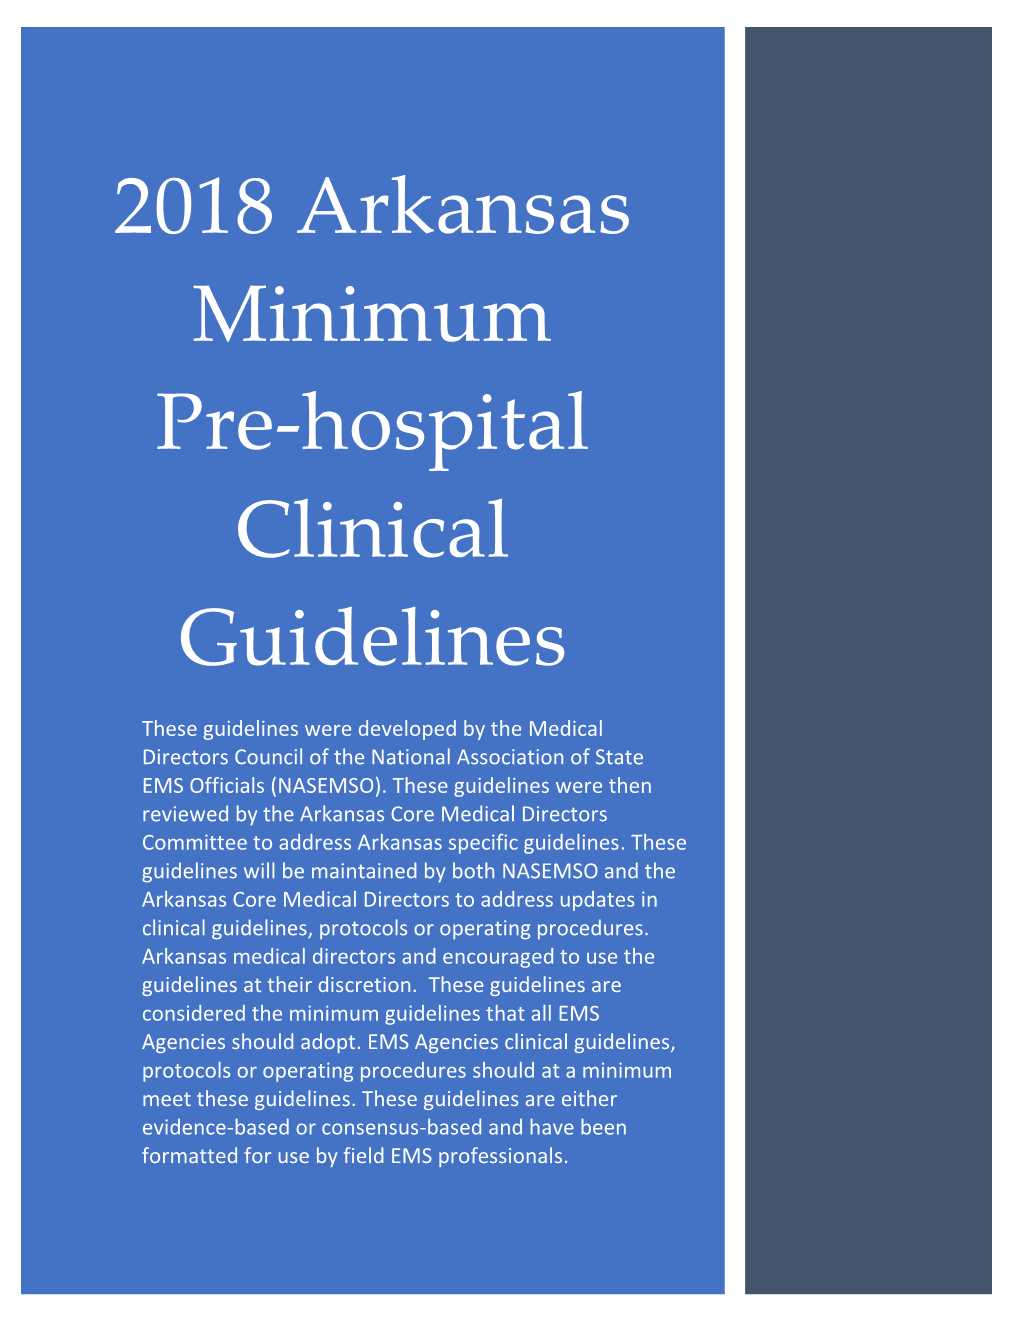 2018 Arkansas Minimum Pre-Hospital Clinical Guidelines